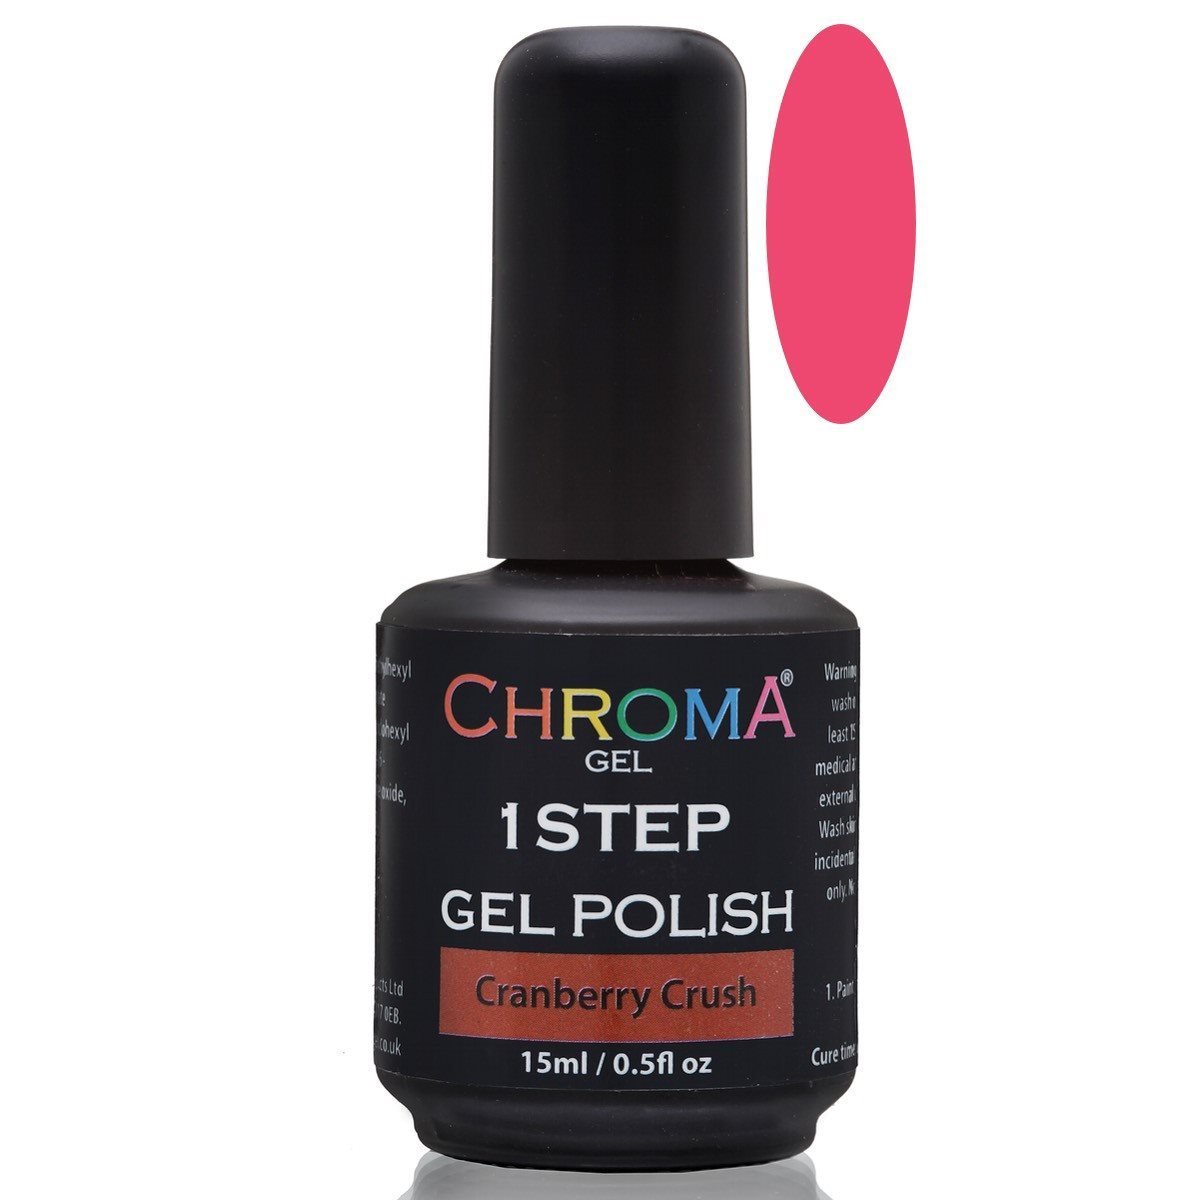 Chroma Gel 1 Step Gel Polish Cranberry Crush No.48 - Chroma Gel